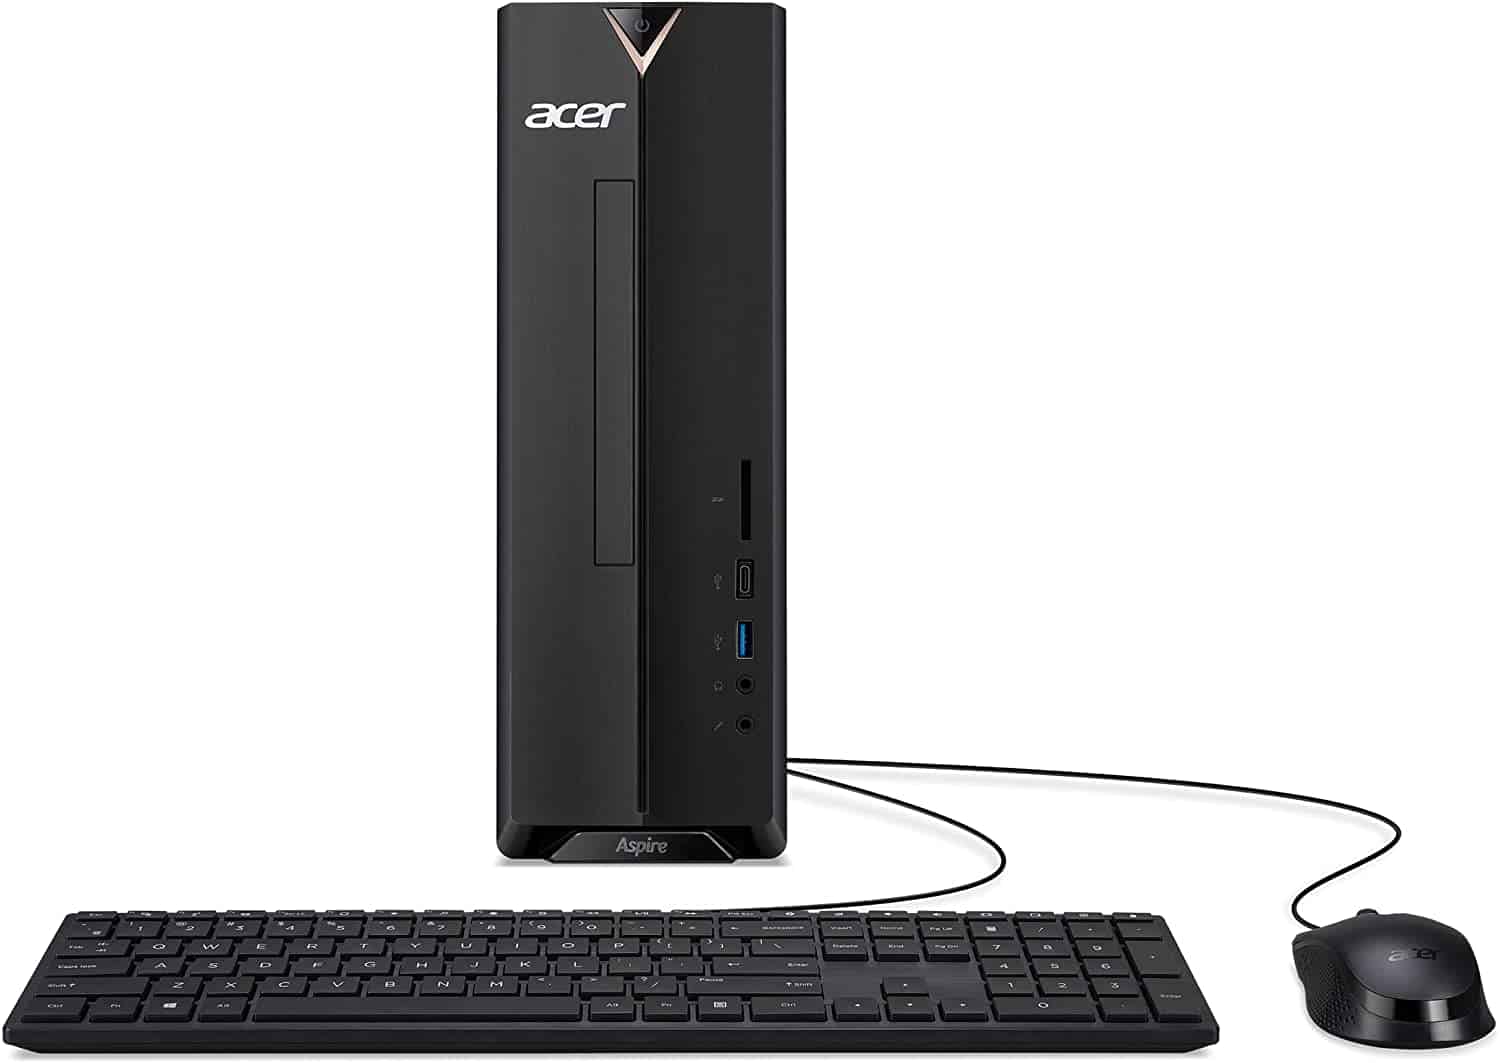 Acer Aspire XC-895-UR11 Review